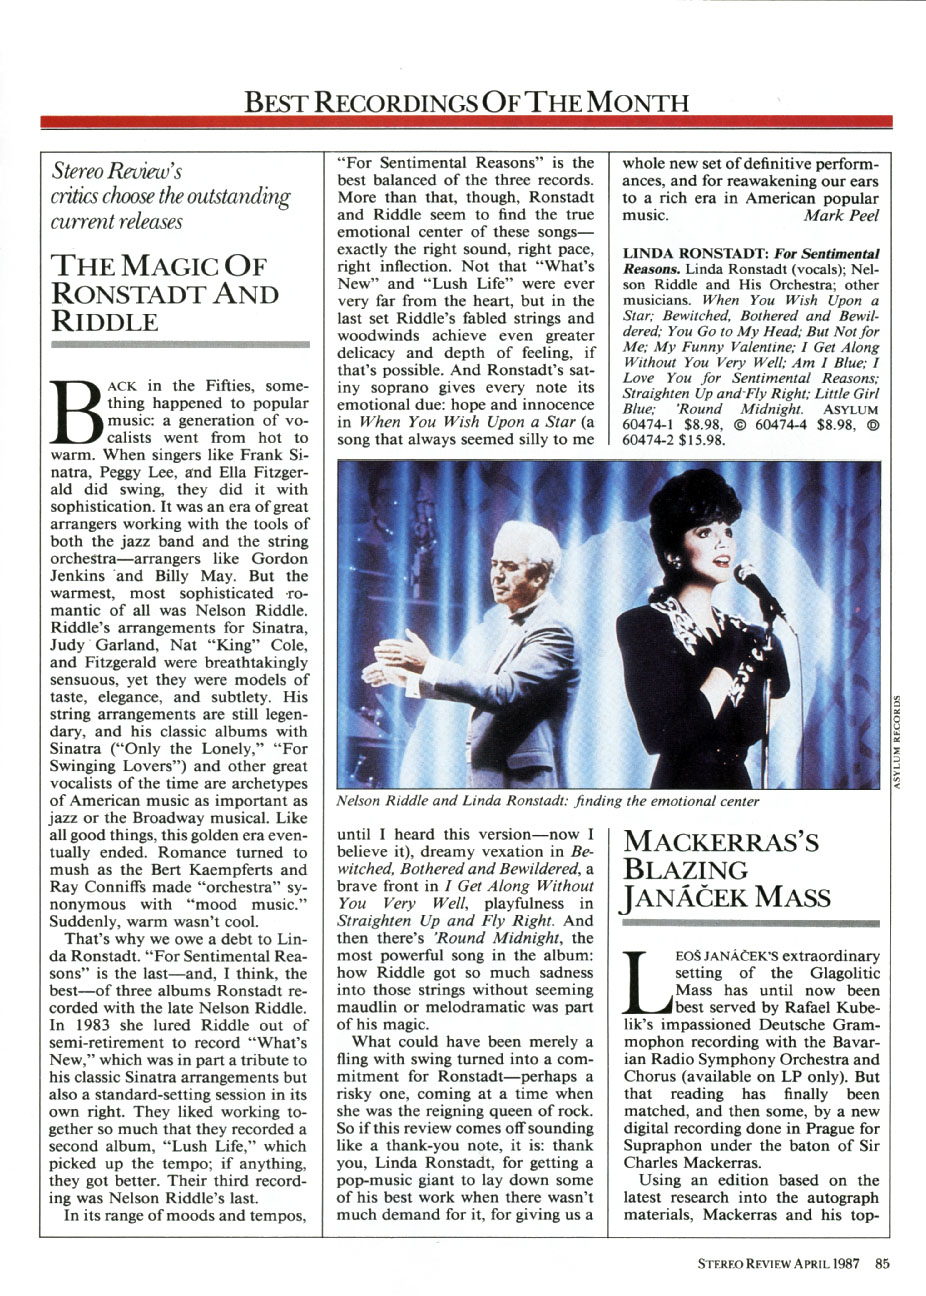 Linda Ronstadt For Sentimental Reasons Stereo Review April 1987